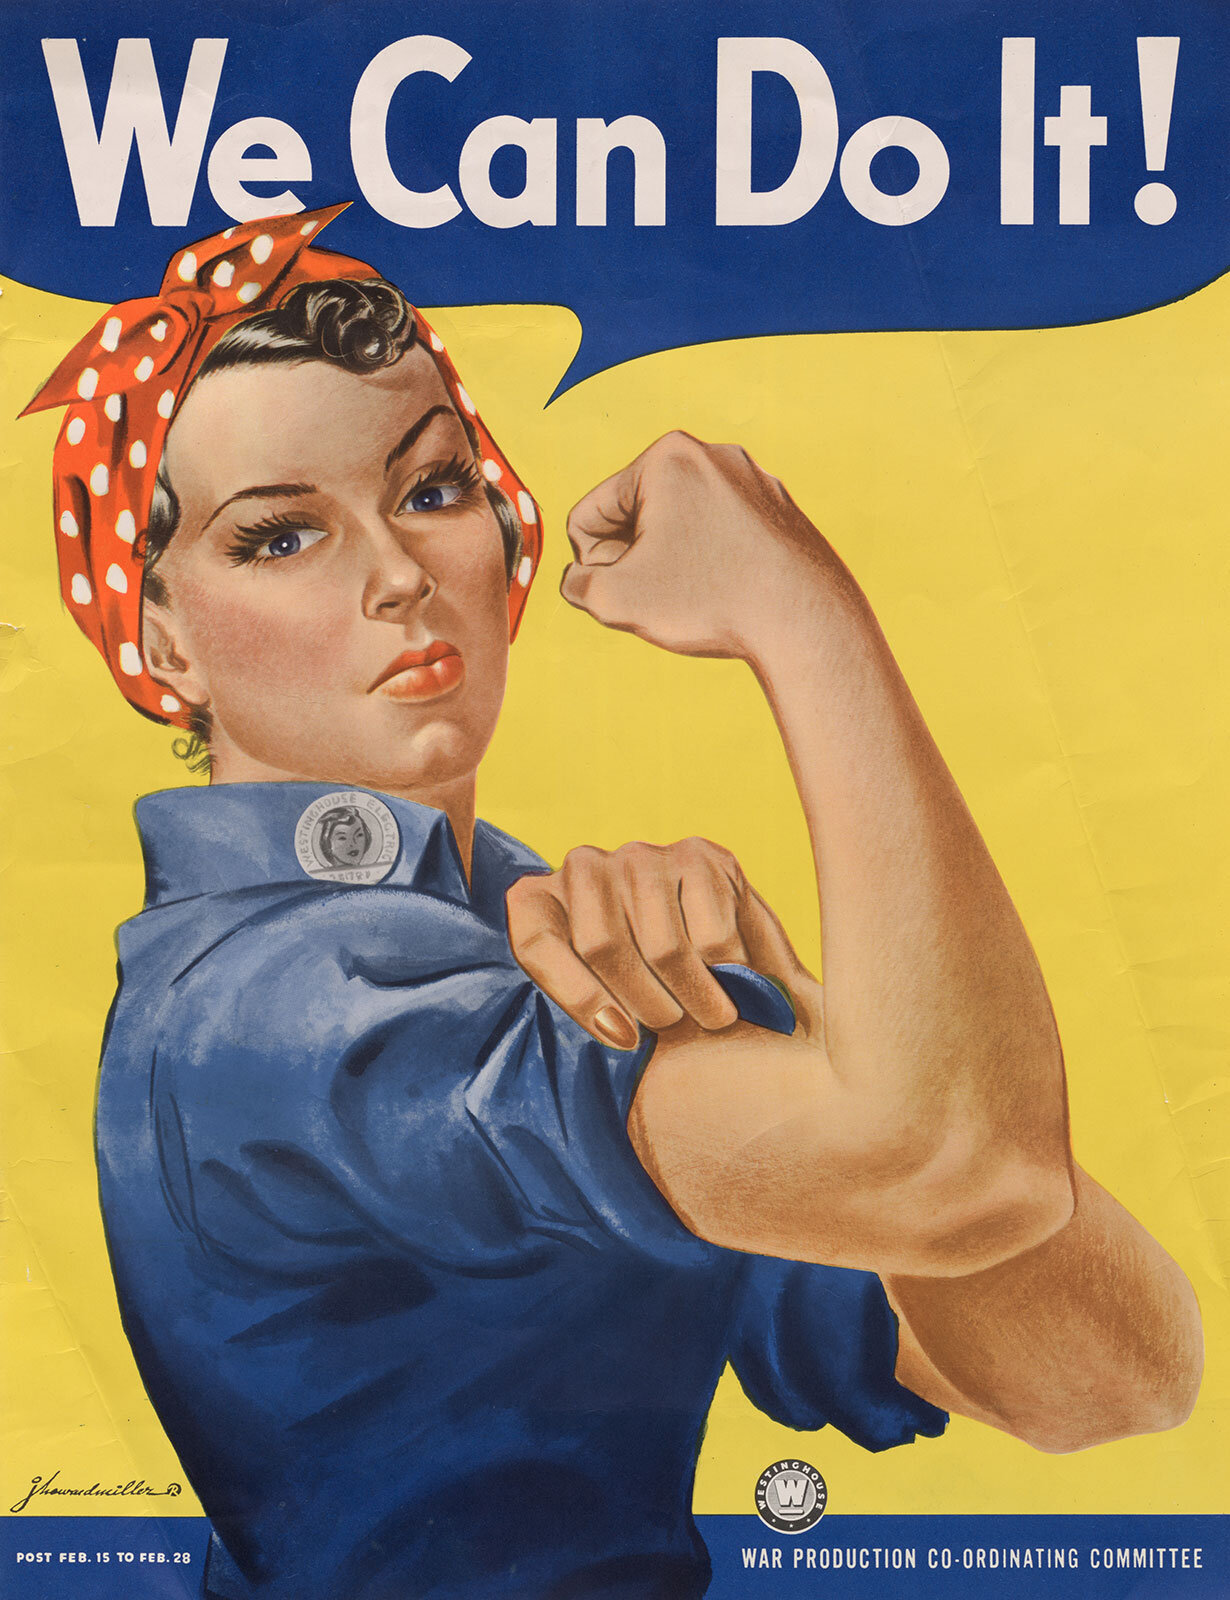 Rosie-the-Riveter-We-Can-Do-It-poster-J-Howard-Miller-circa-1942-1943-World-War-II.jpeg